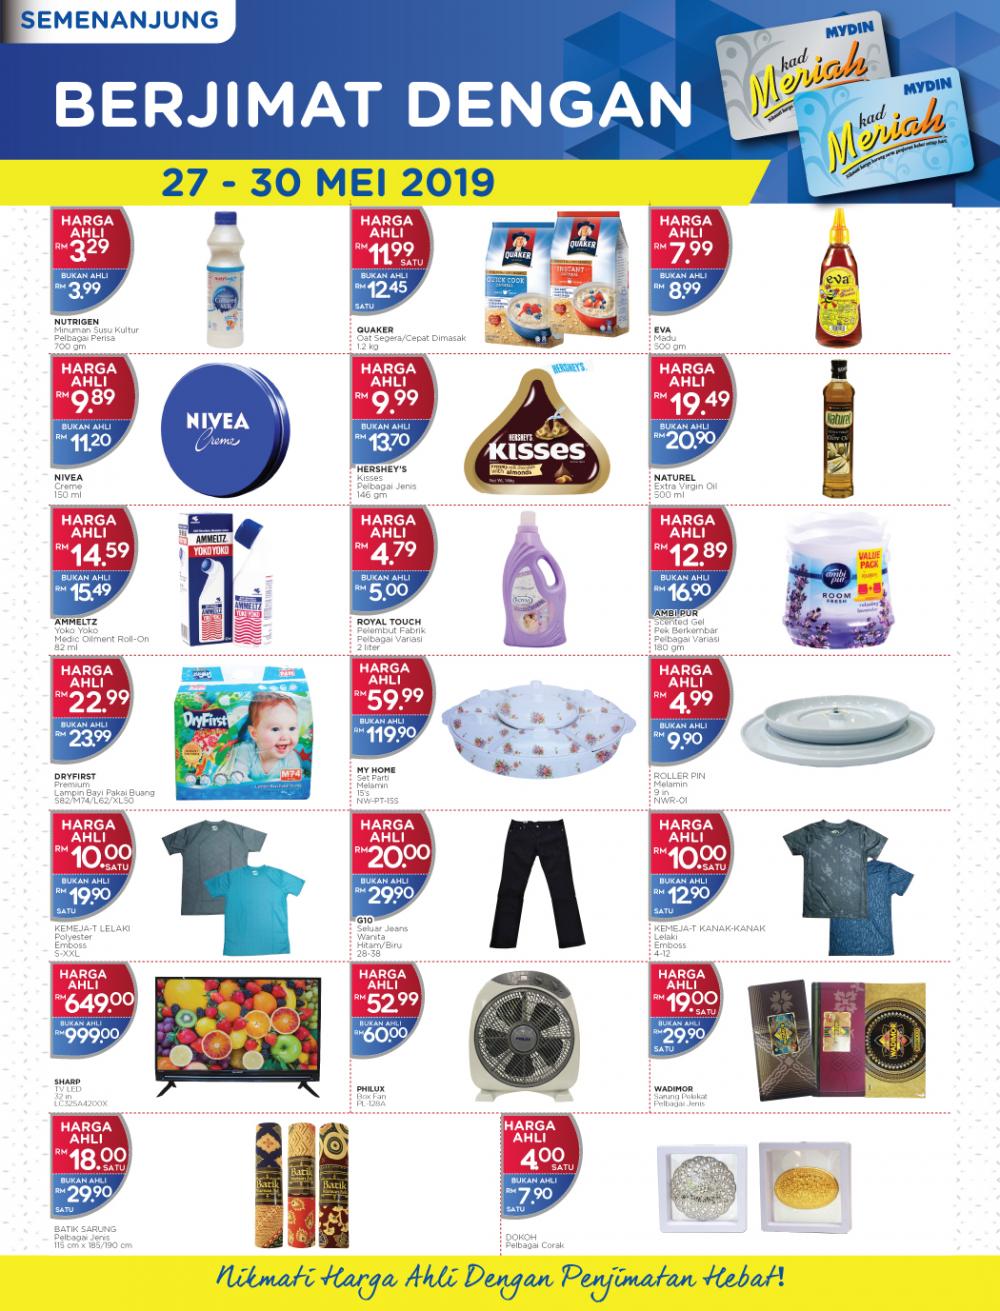 MYDIN Meriah Special Promotion (27 May 2019 - 30 May 2019)